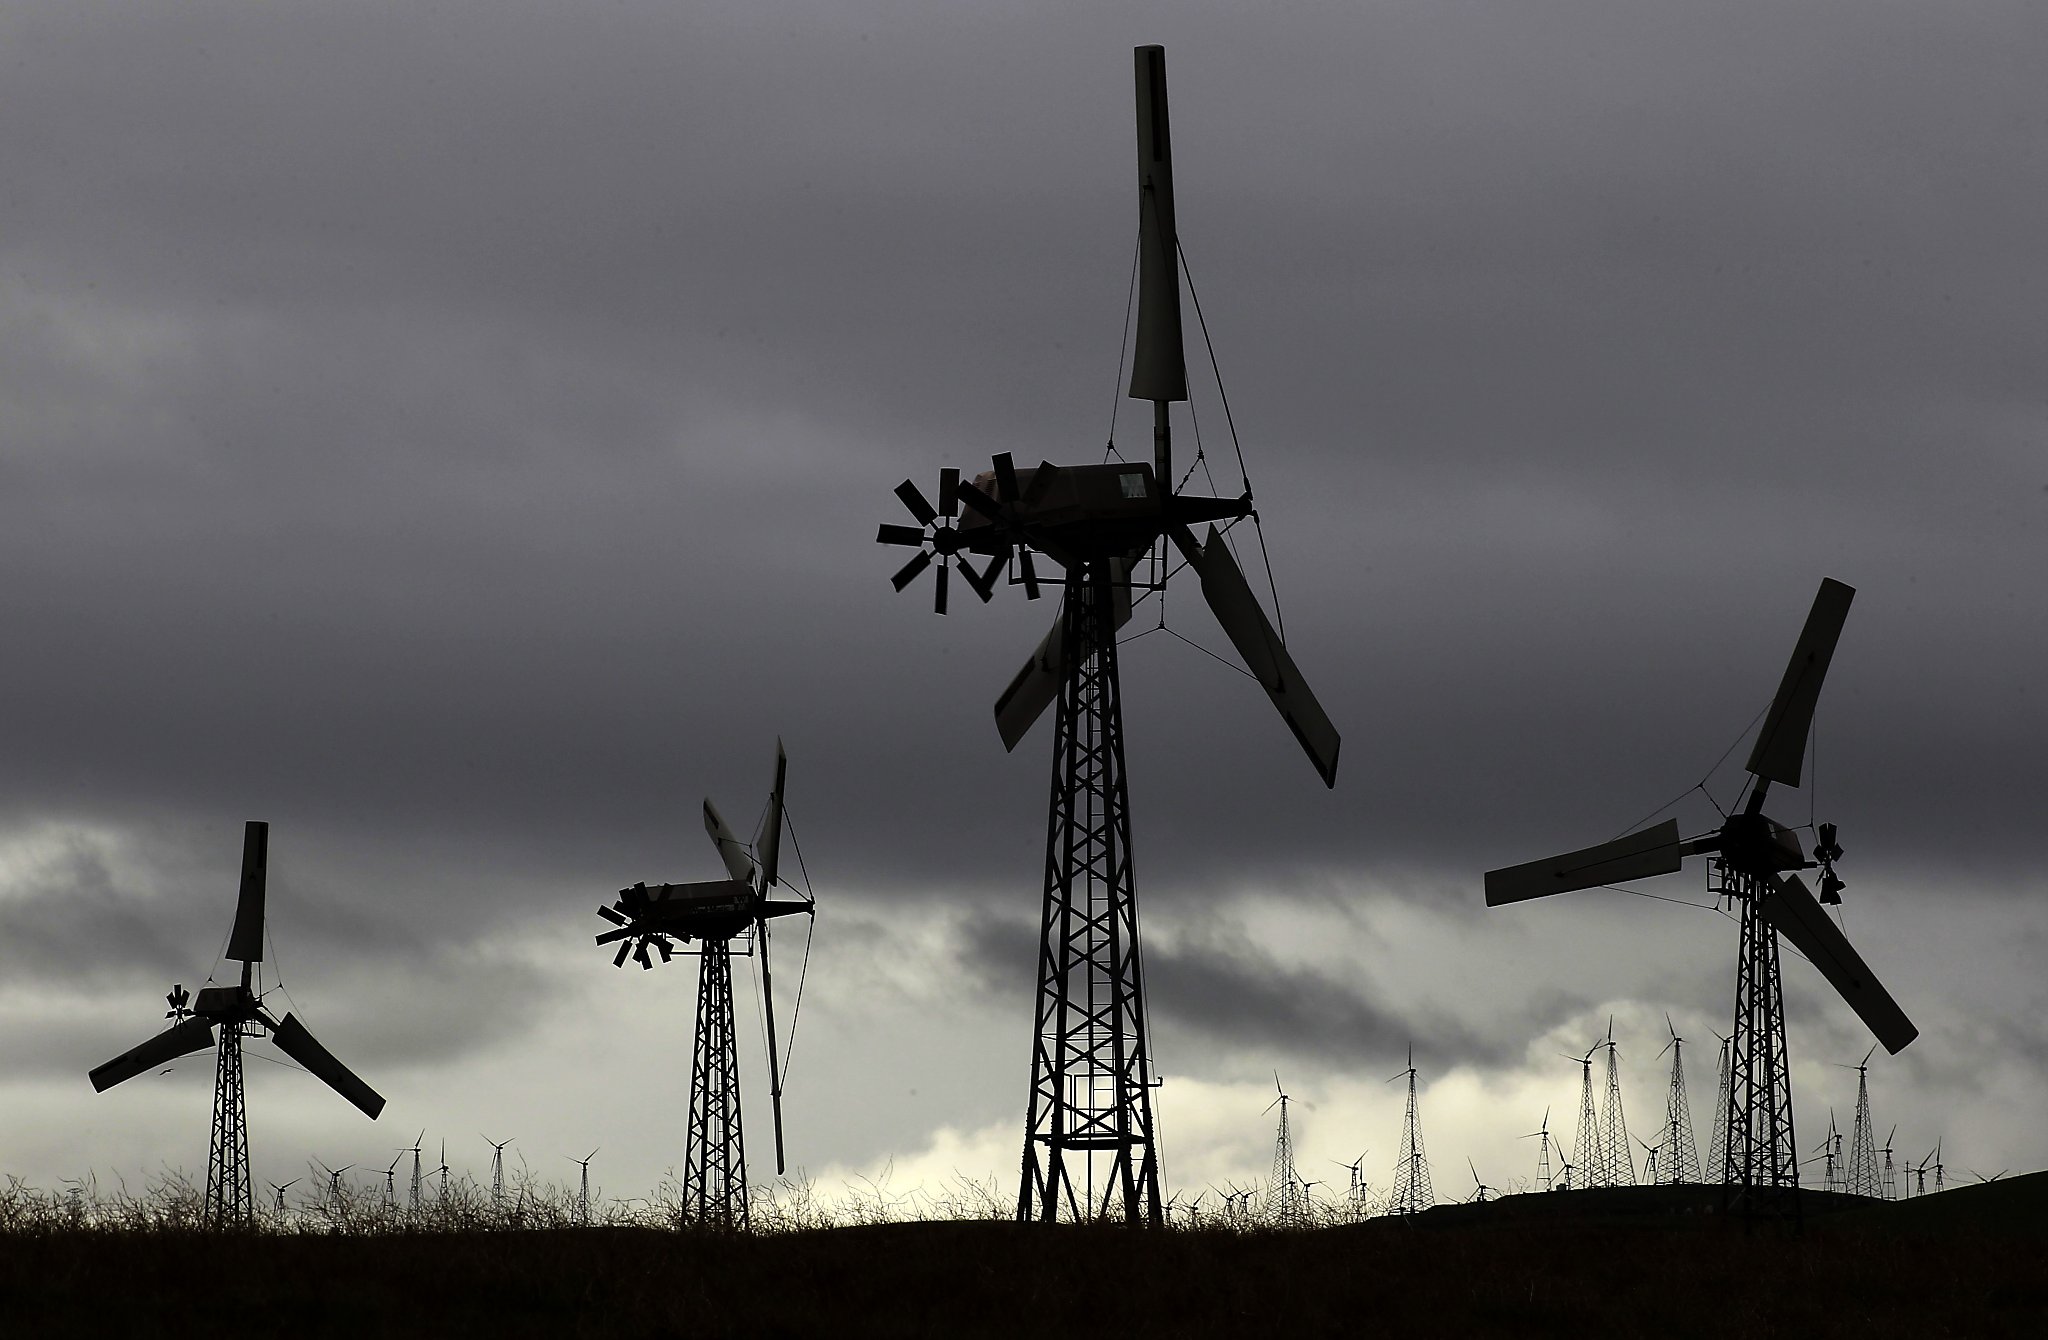 Wind-power company to replace bird-killing Altamont turbines - SFGate2048 x 1340